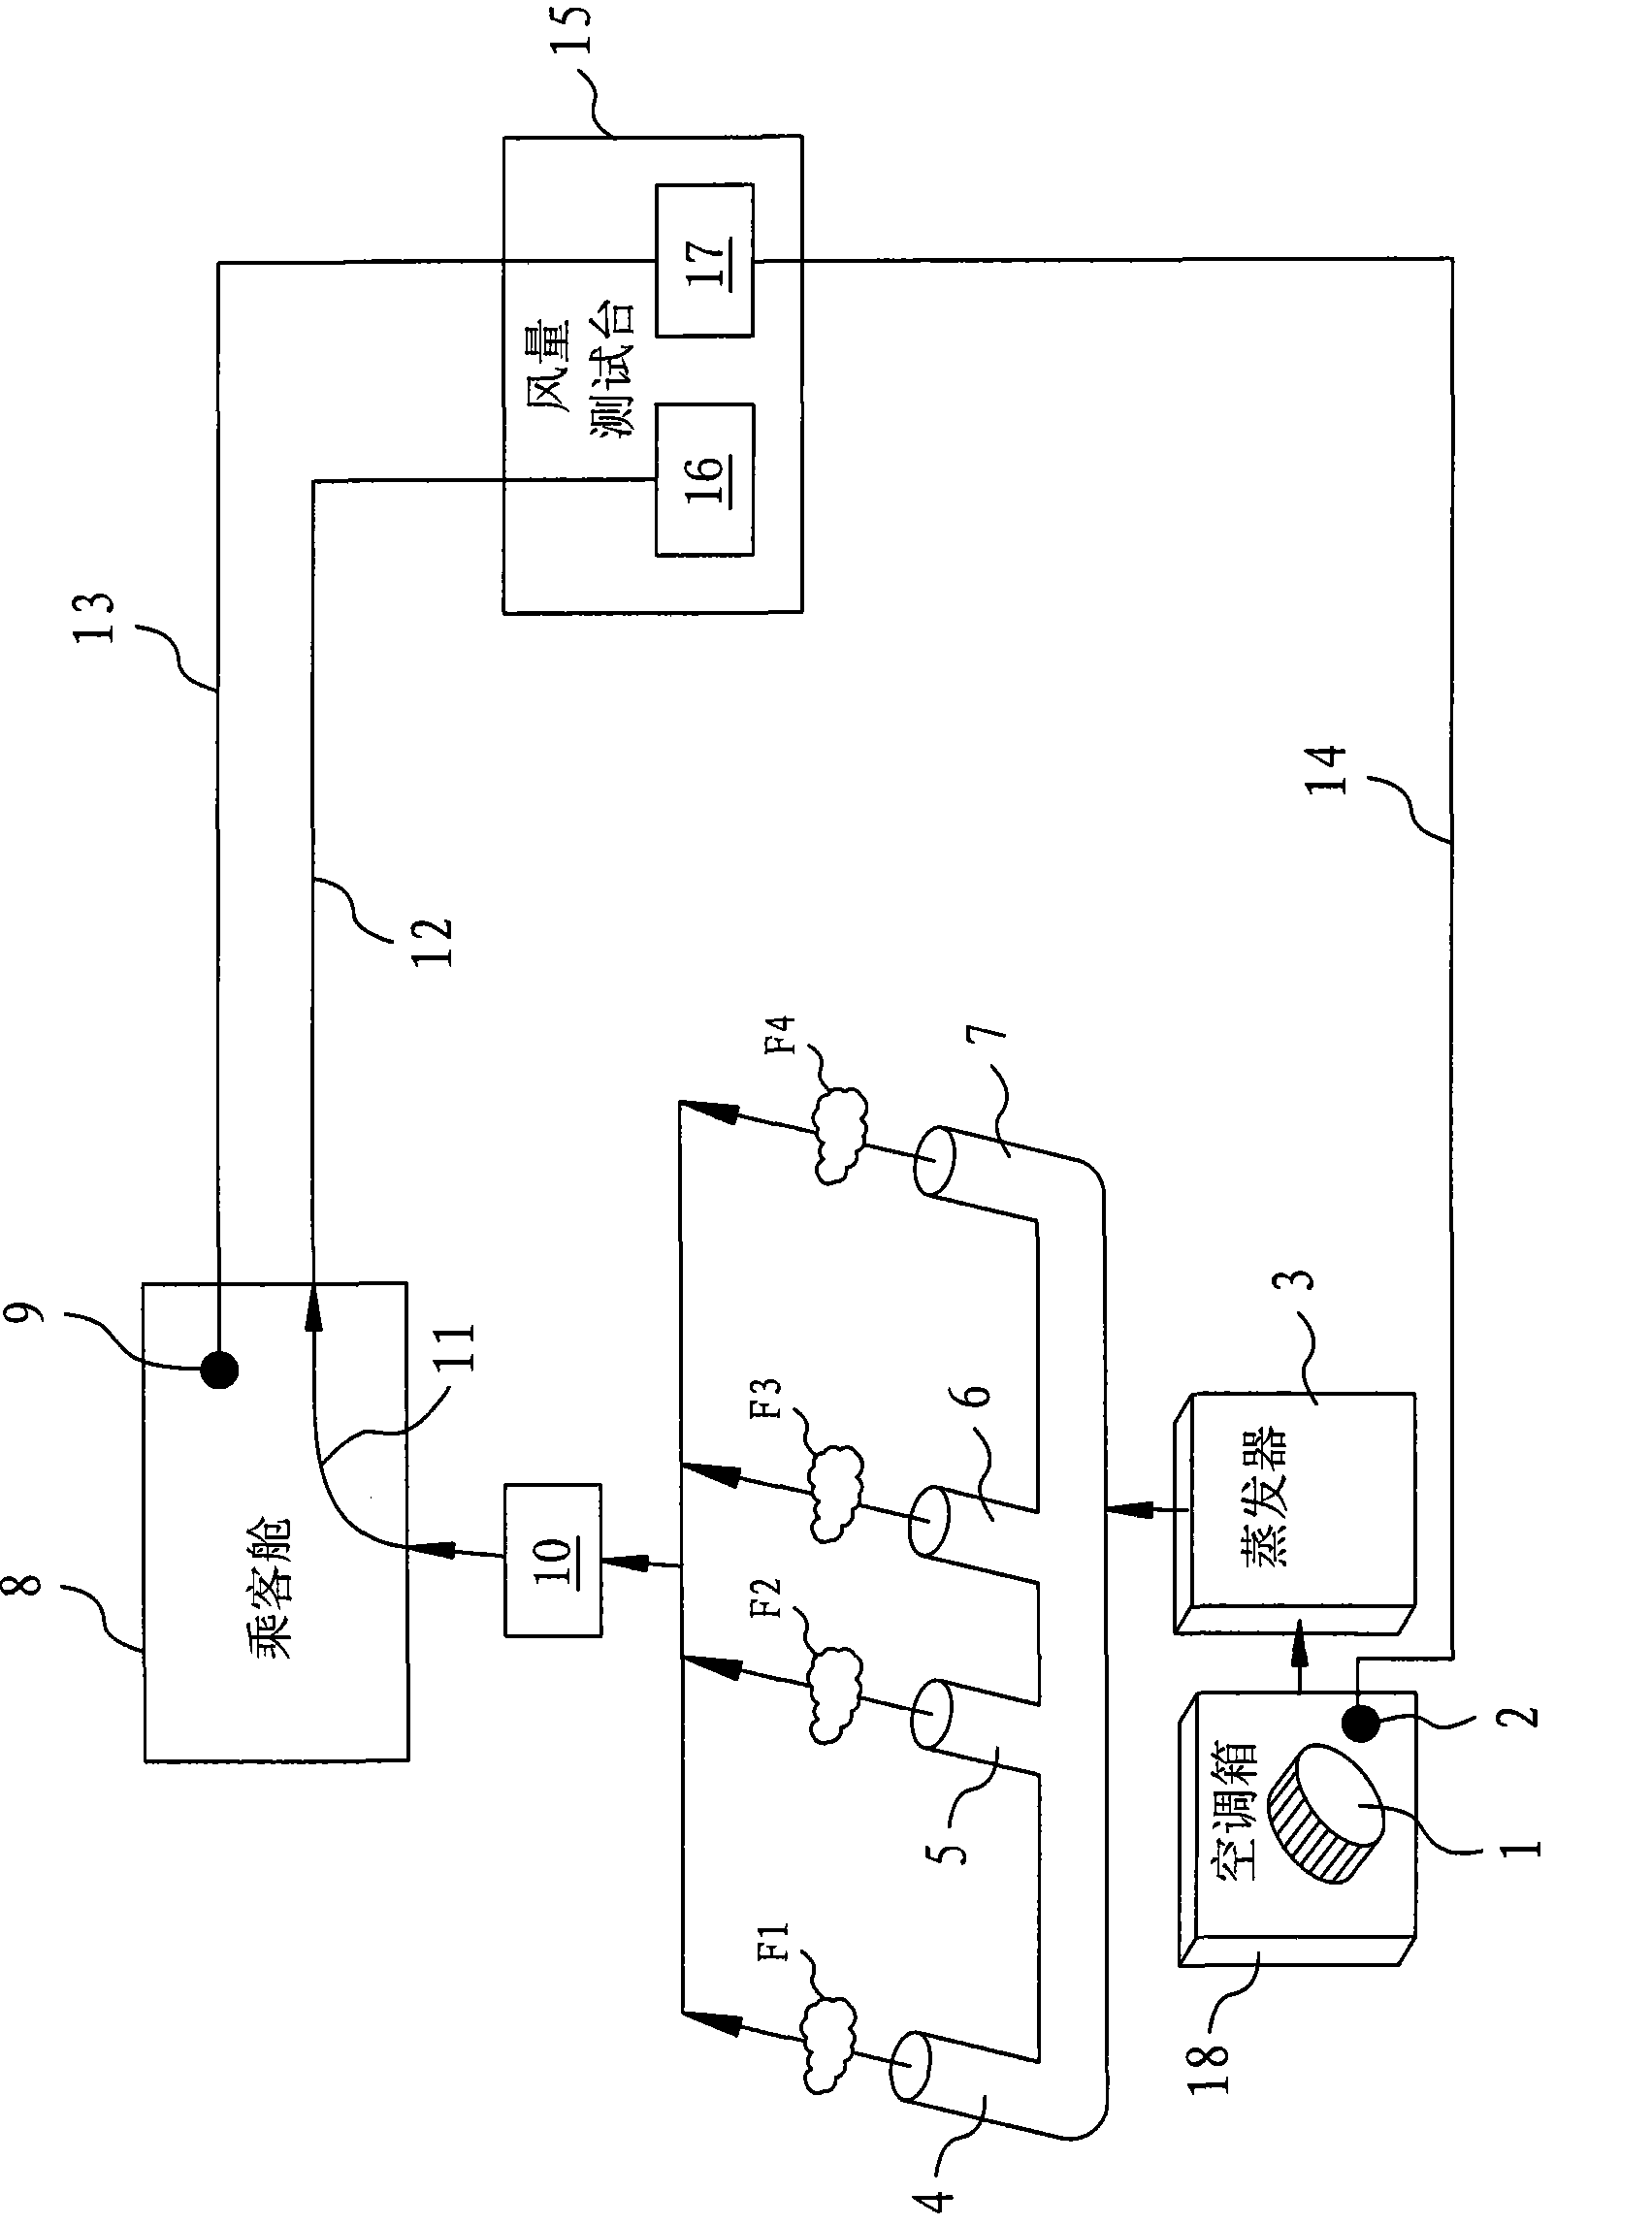 Method for testing air volume distribution